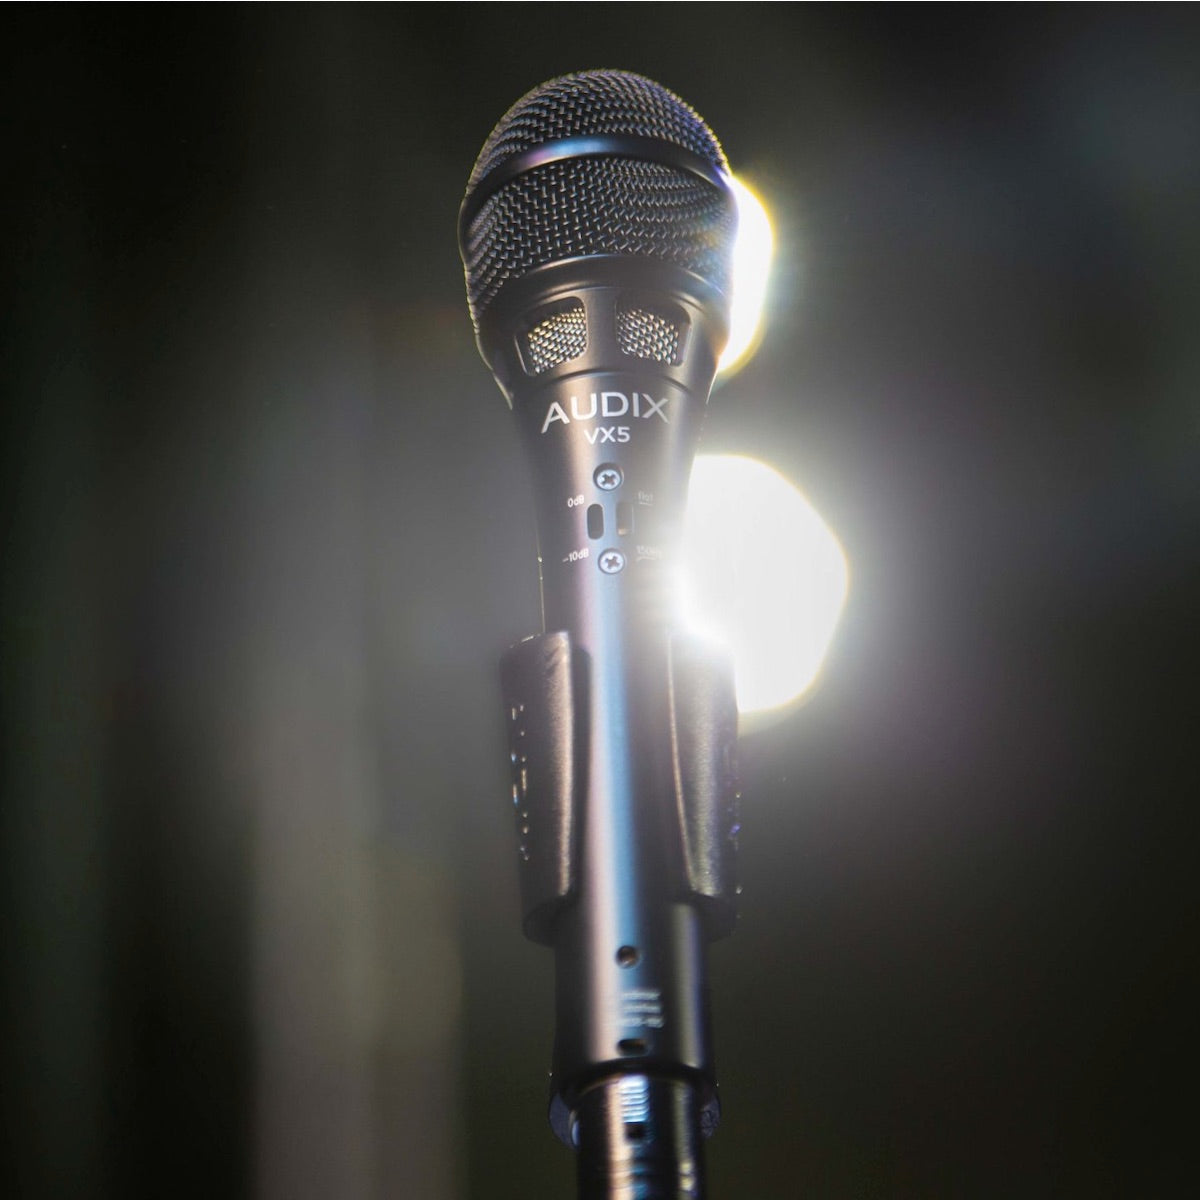 Audix VX5 Premium Electret Condenser Vocal Microphone, studio